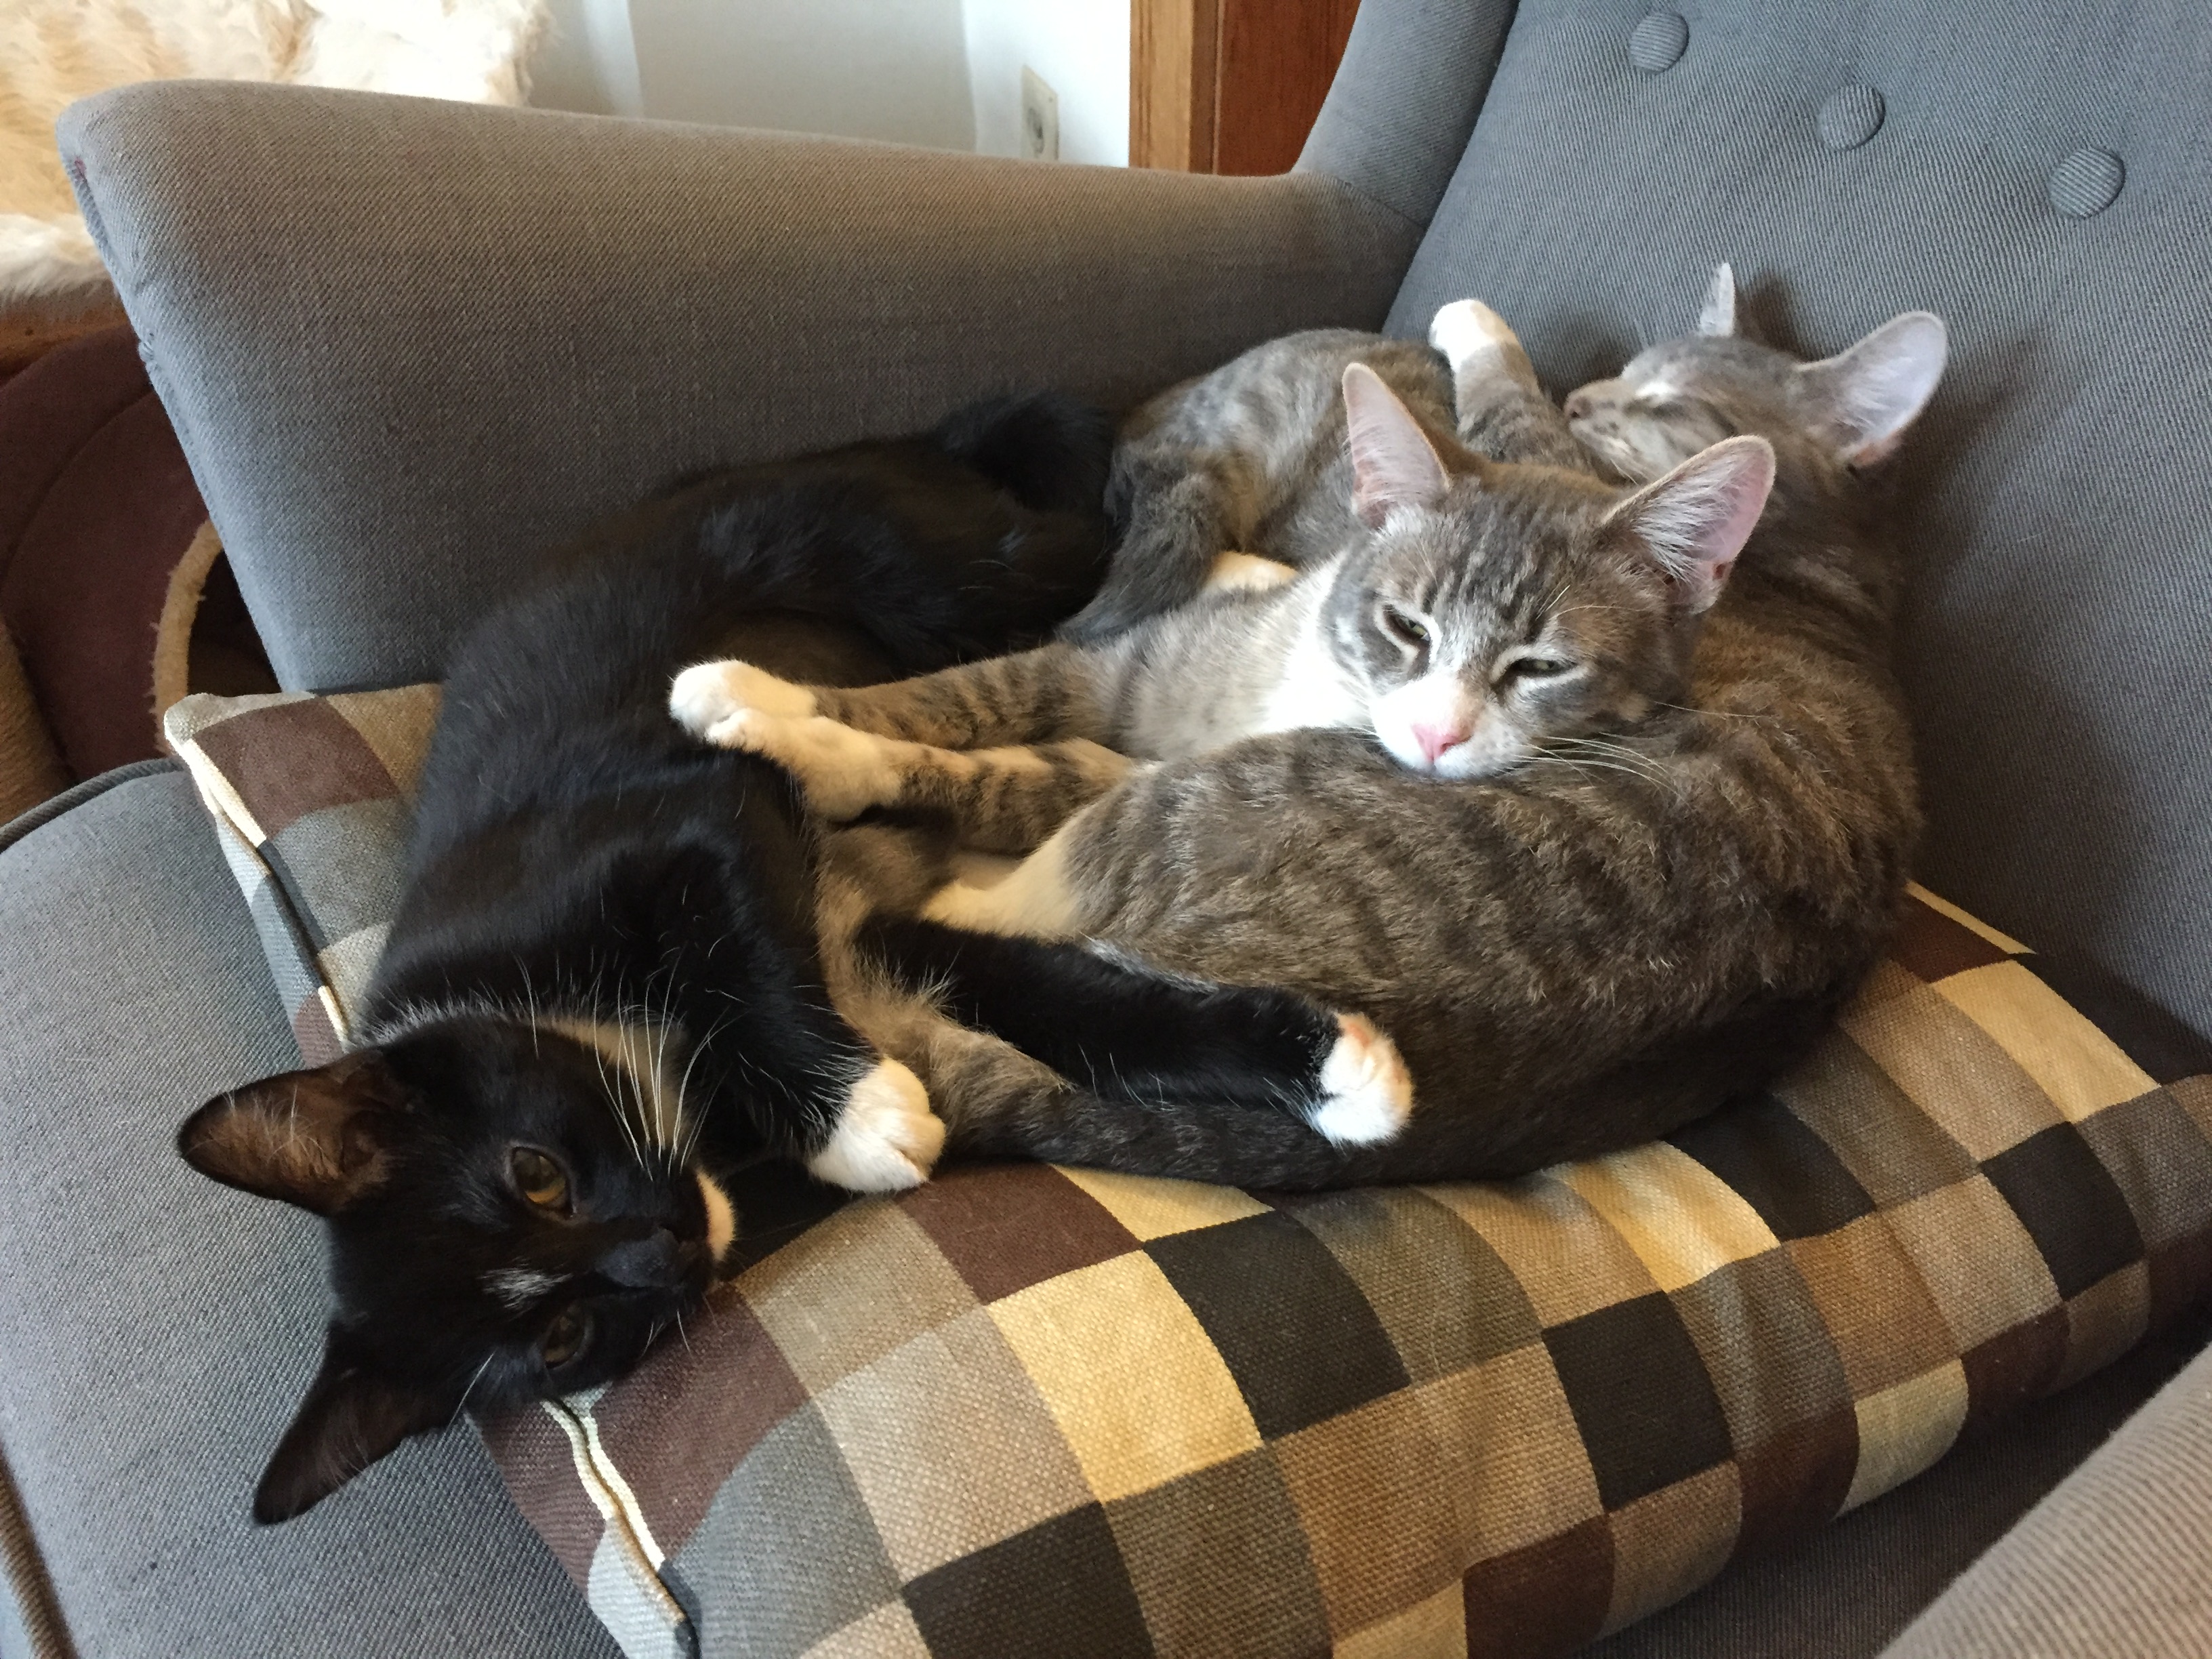 This kitten pile needs a home! Meet Pep, Pufendorf, and Niko 